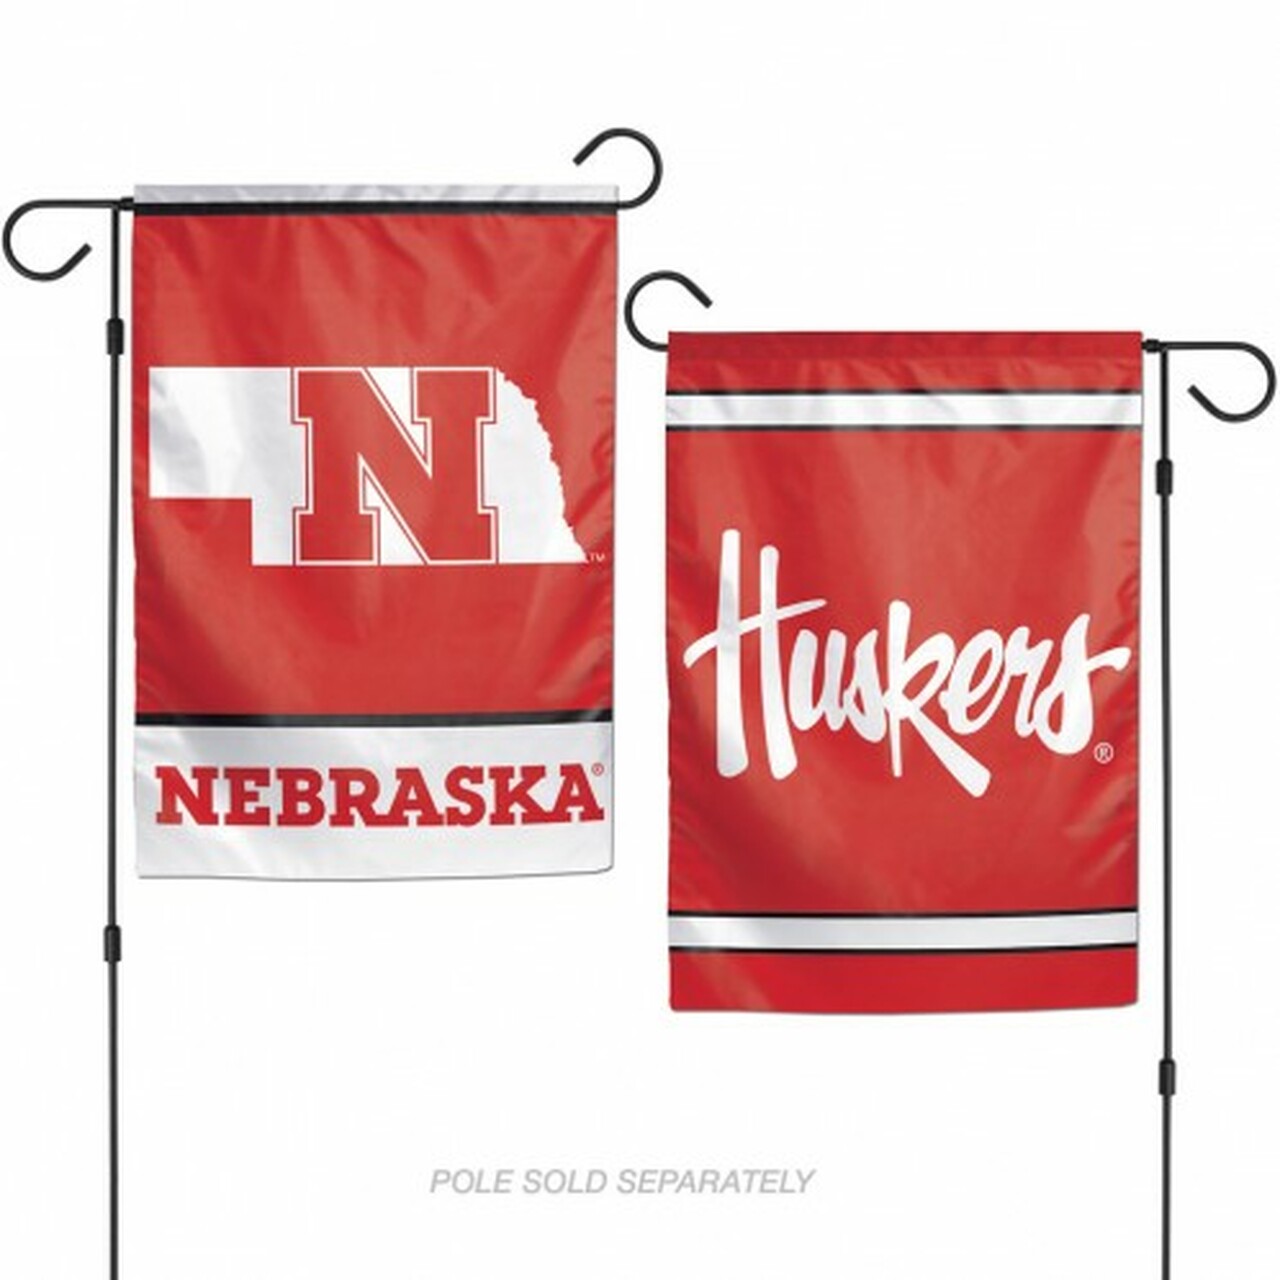 Nebraska Cornhuskers 12x18 Garden Flag 2 Sided by Wincraft